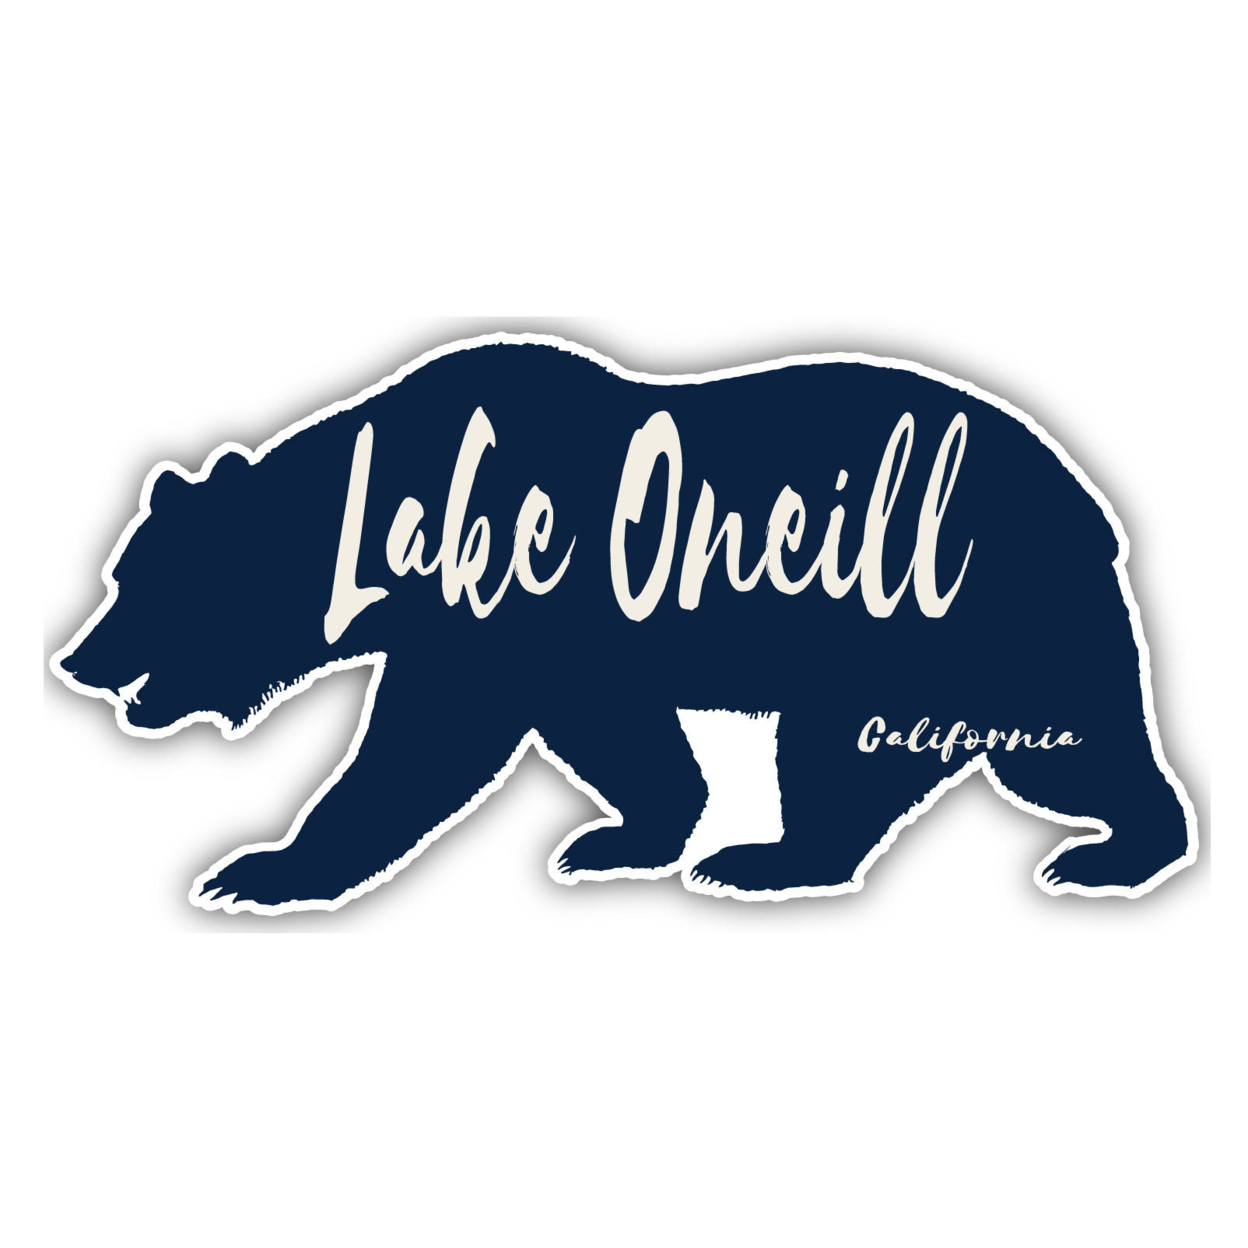 Lake Perris California Souvenir Decorative Stickers (Choose Theme And Size) - 4-Inch, Bear